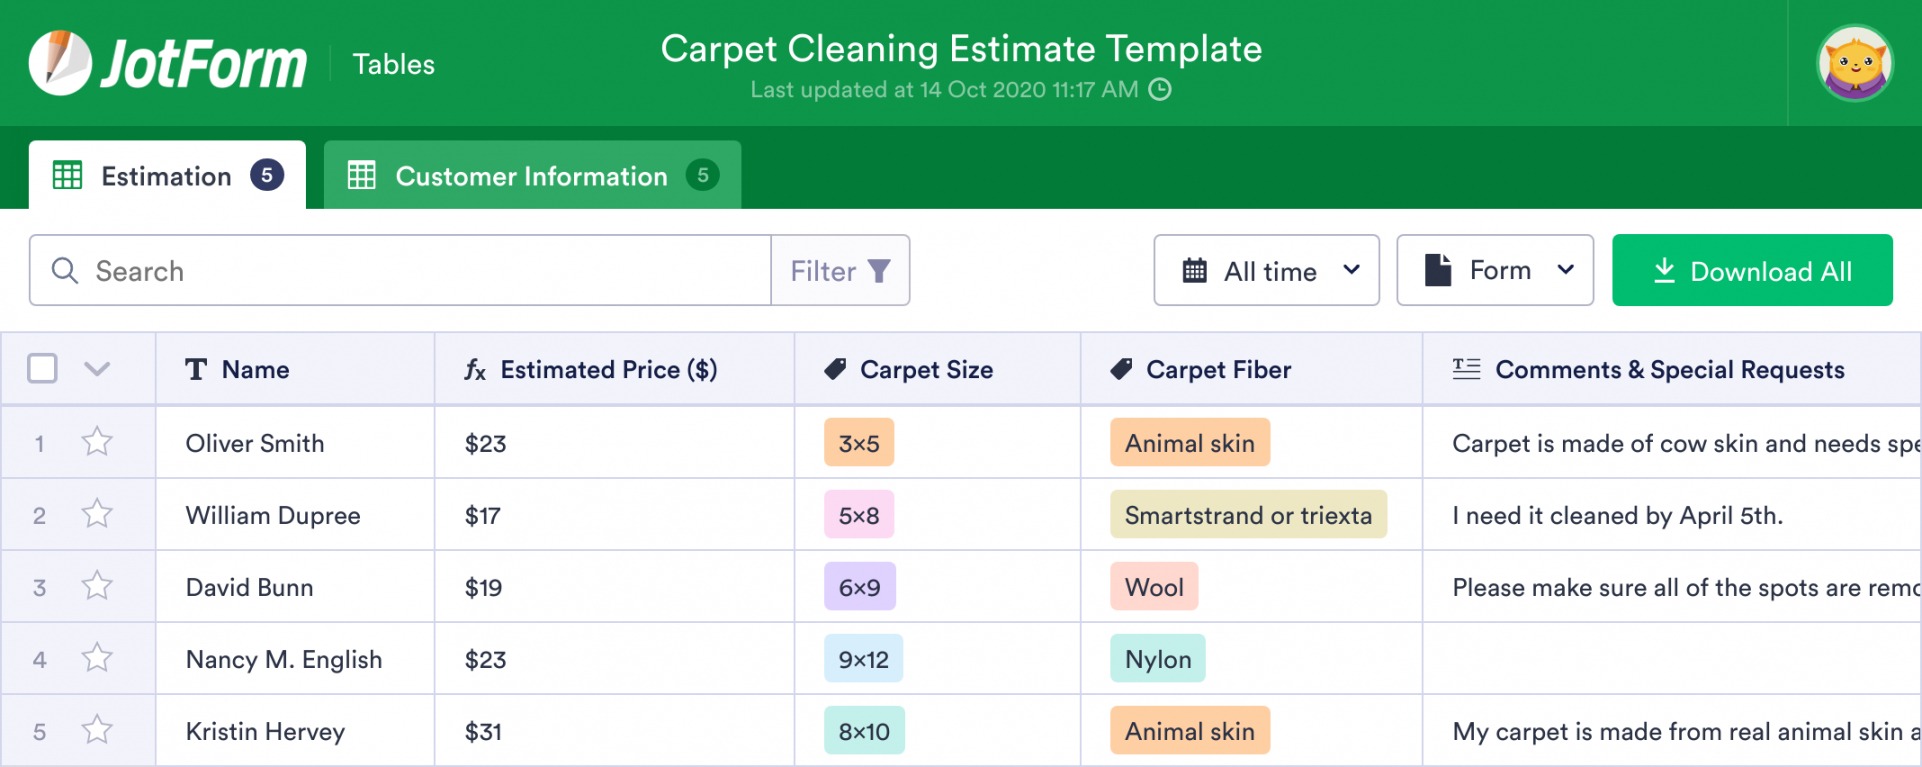 editable carpet cleaning estimate plantilla  jotform tables carpet cleaning estimate template example